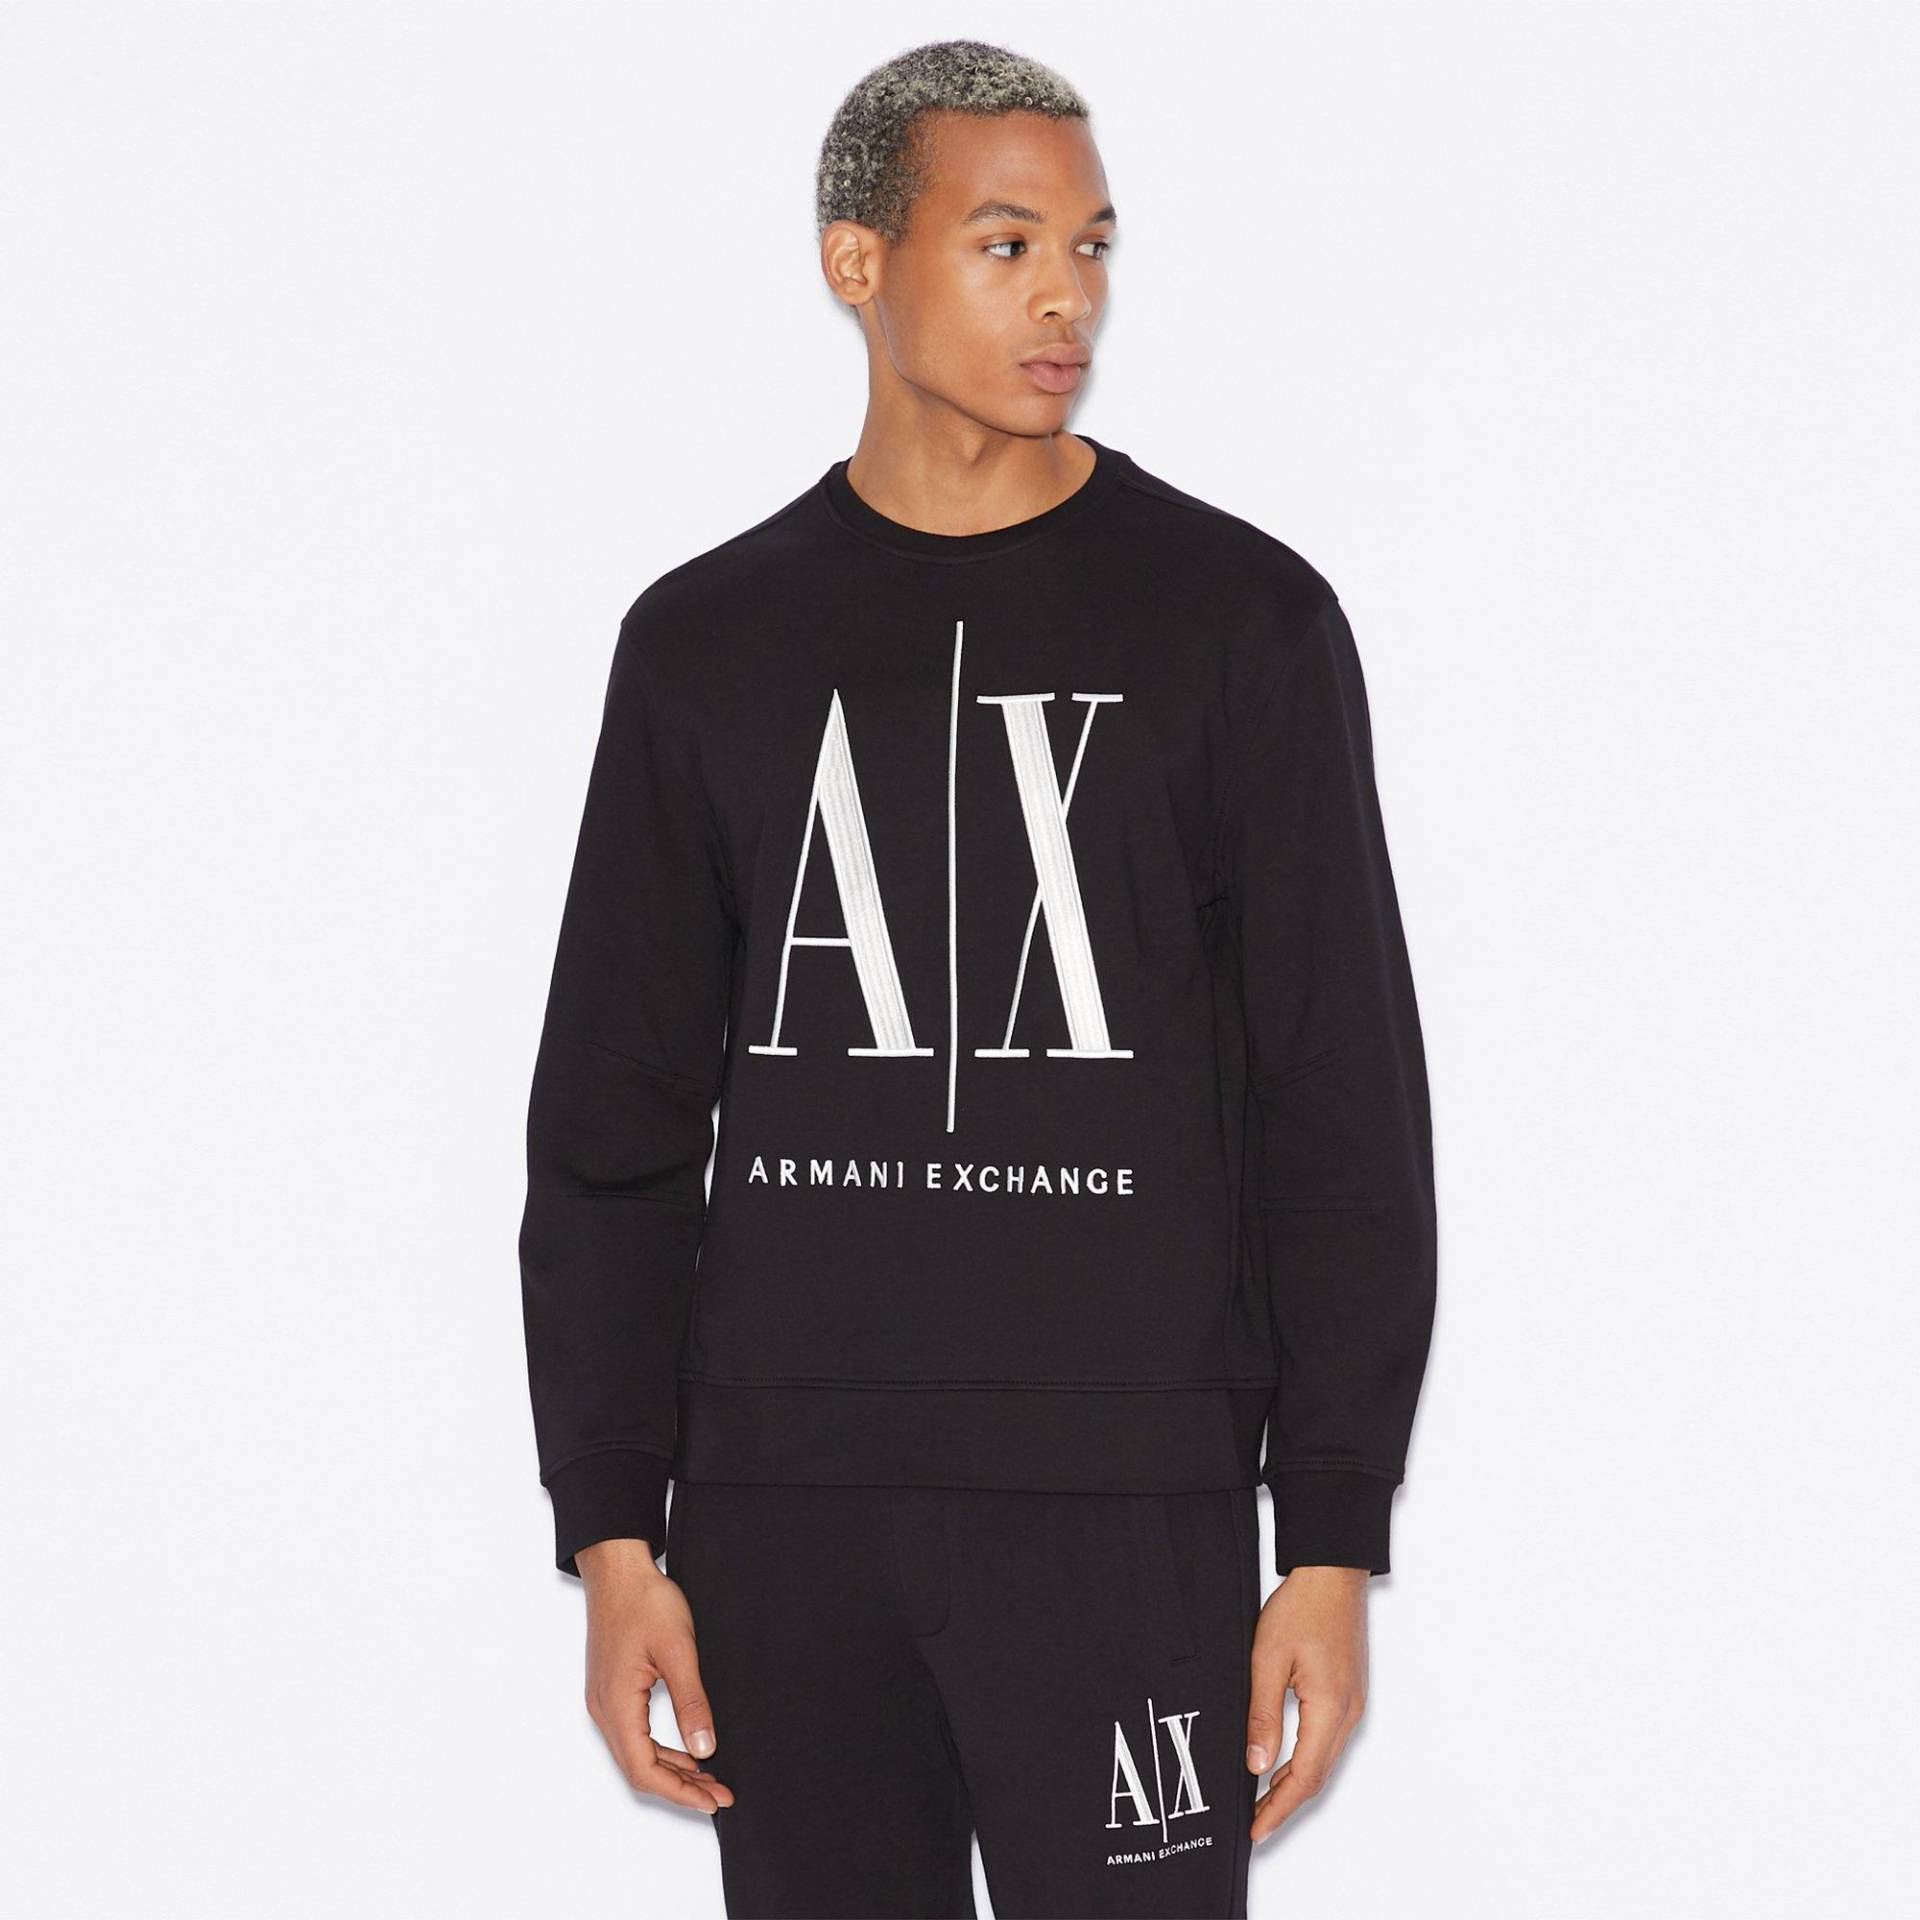 Sweatshirt Herren Black S von Armani Exchange